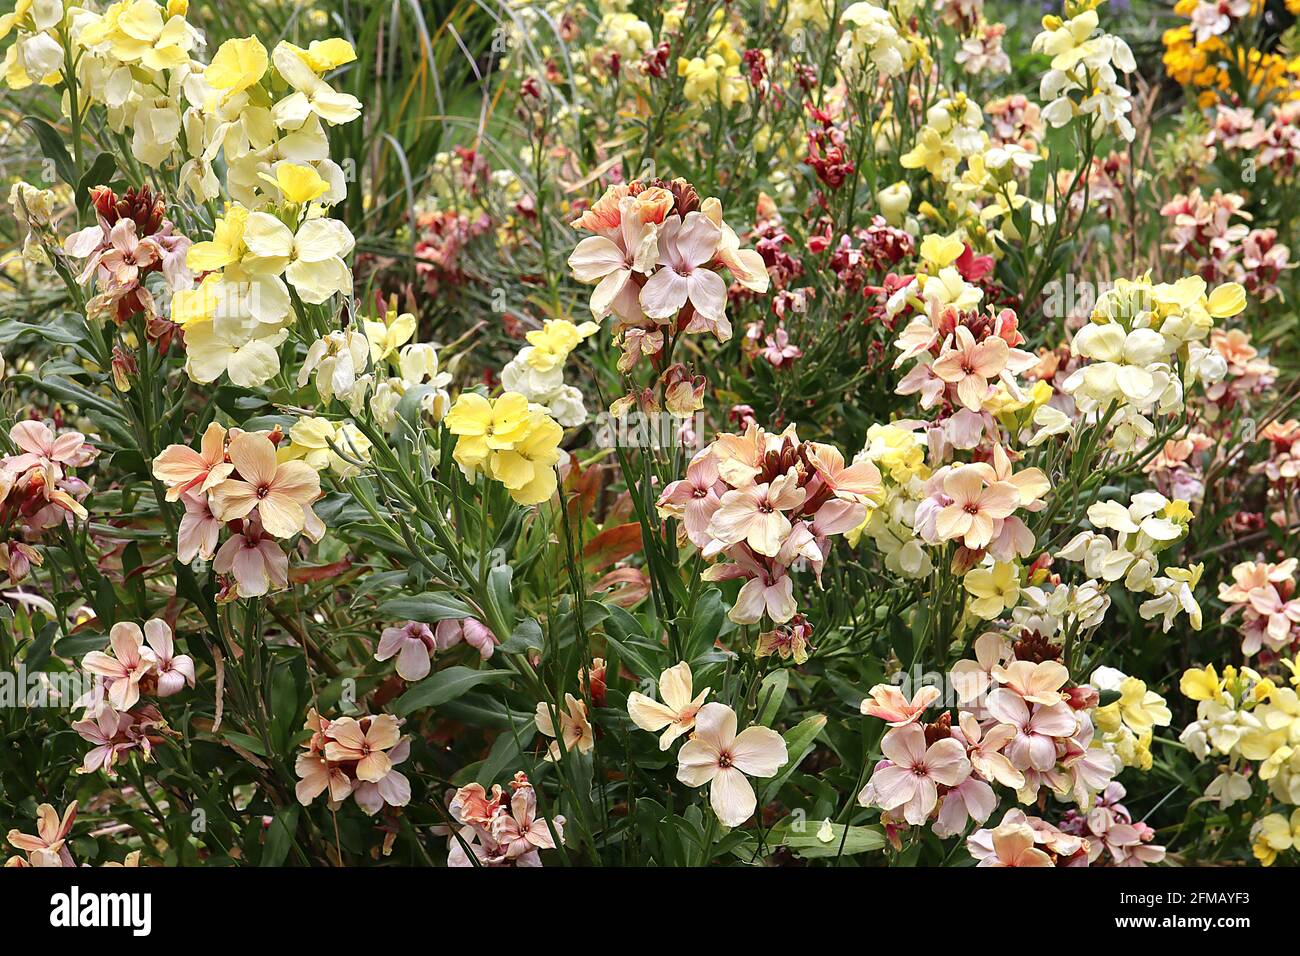 Erysimum cheiri ‘John Codrington’ Wallflower John Codrington – cream, yellow, apricot and pale pink flowers, May, England, UK Stock Photo